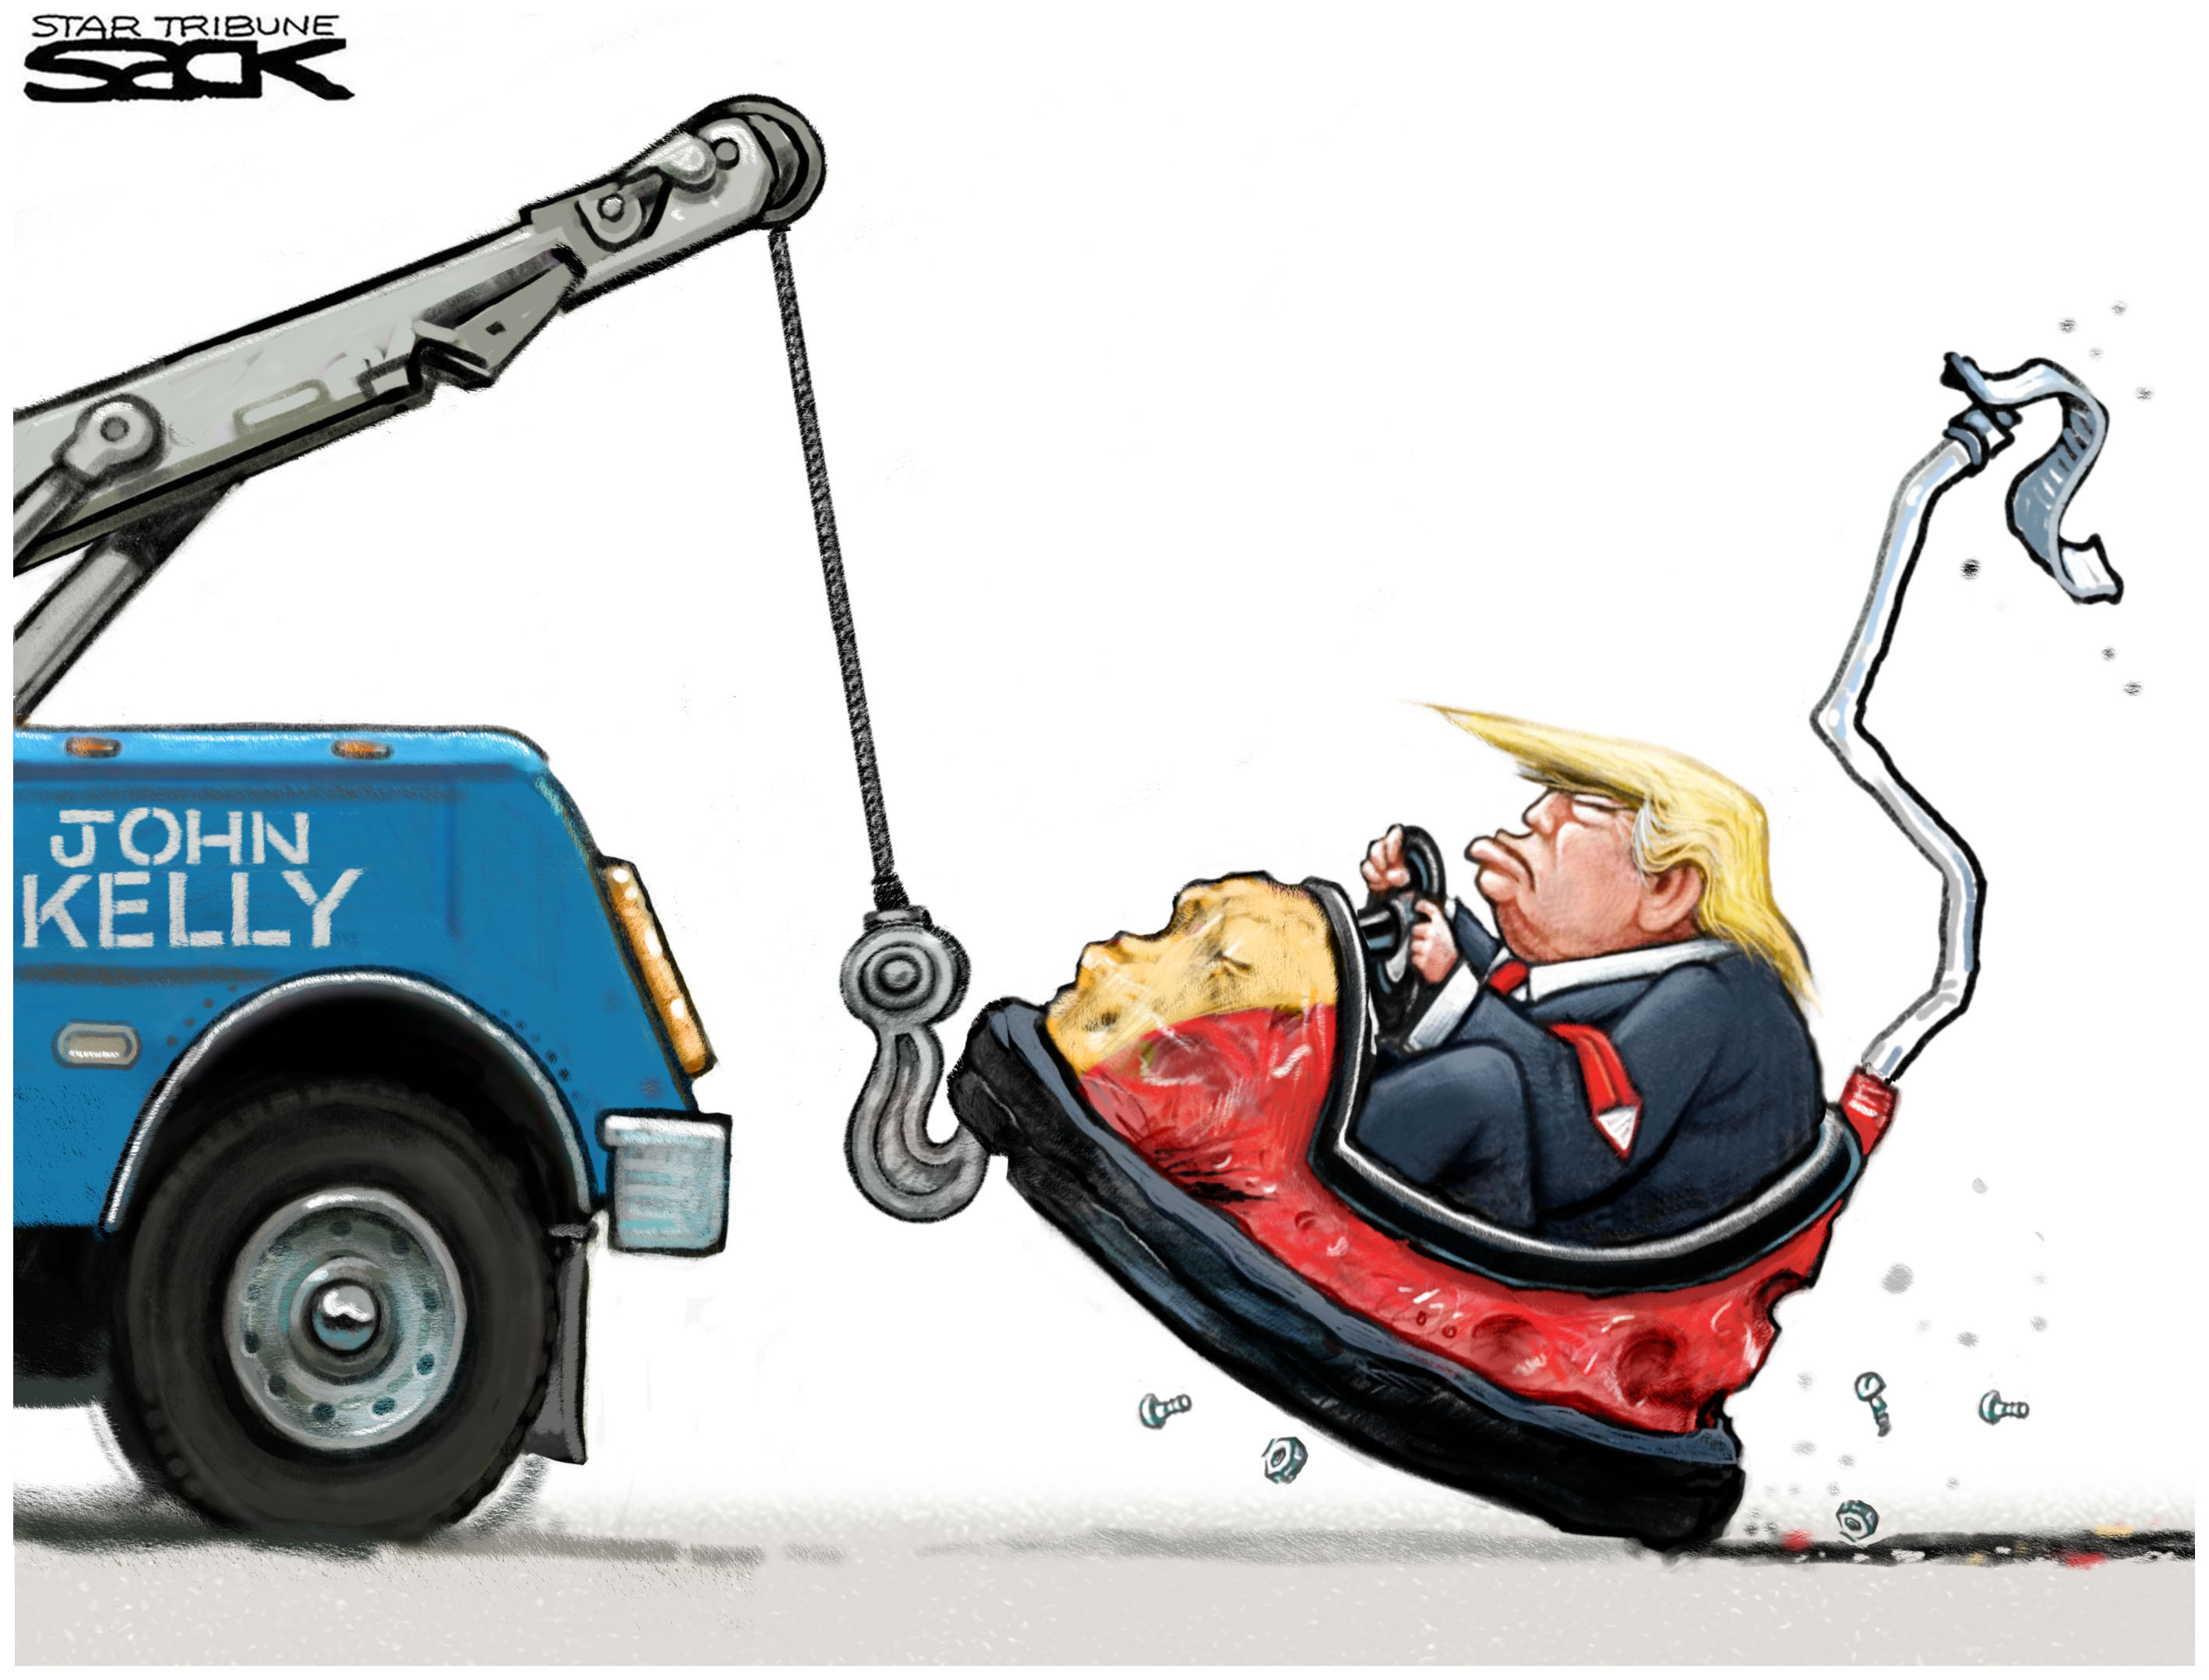 Political cartoon U.S. Trump John Kelly bumper car